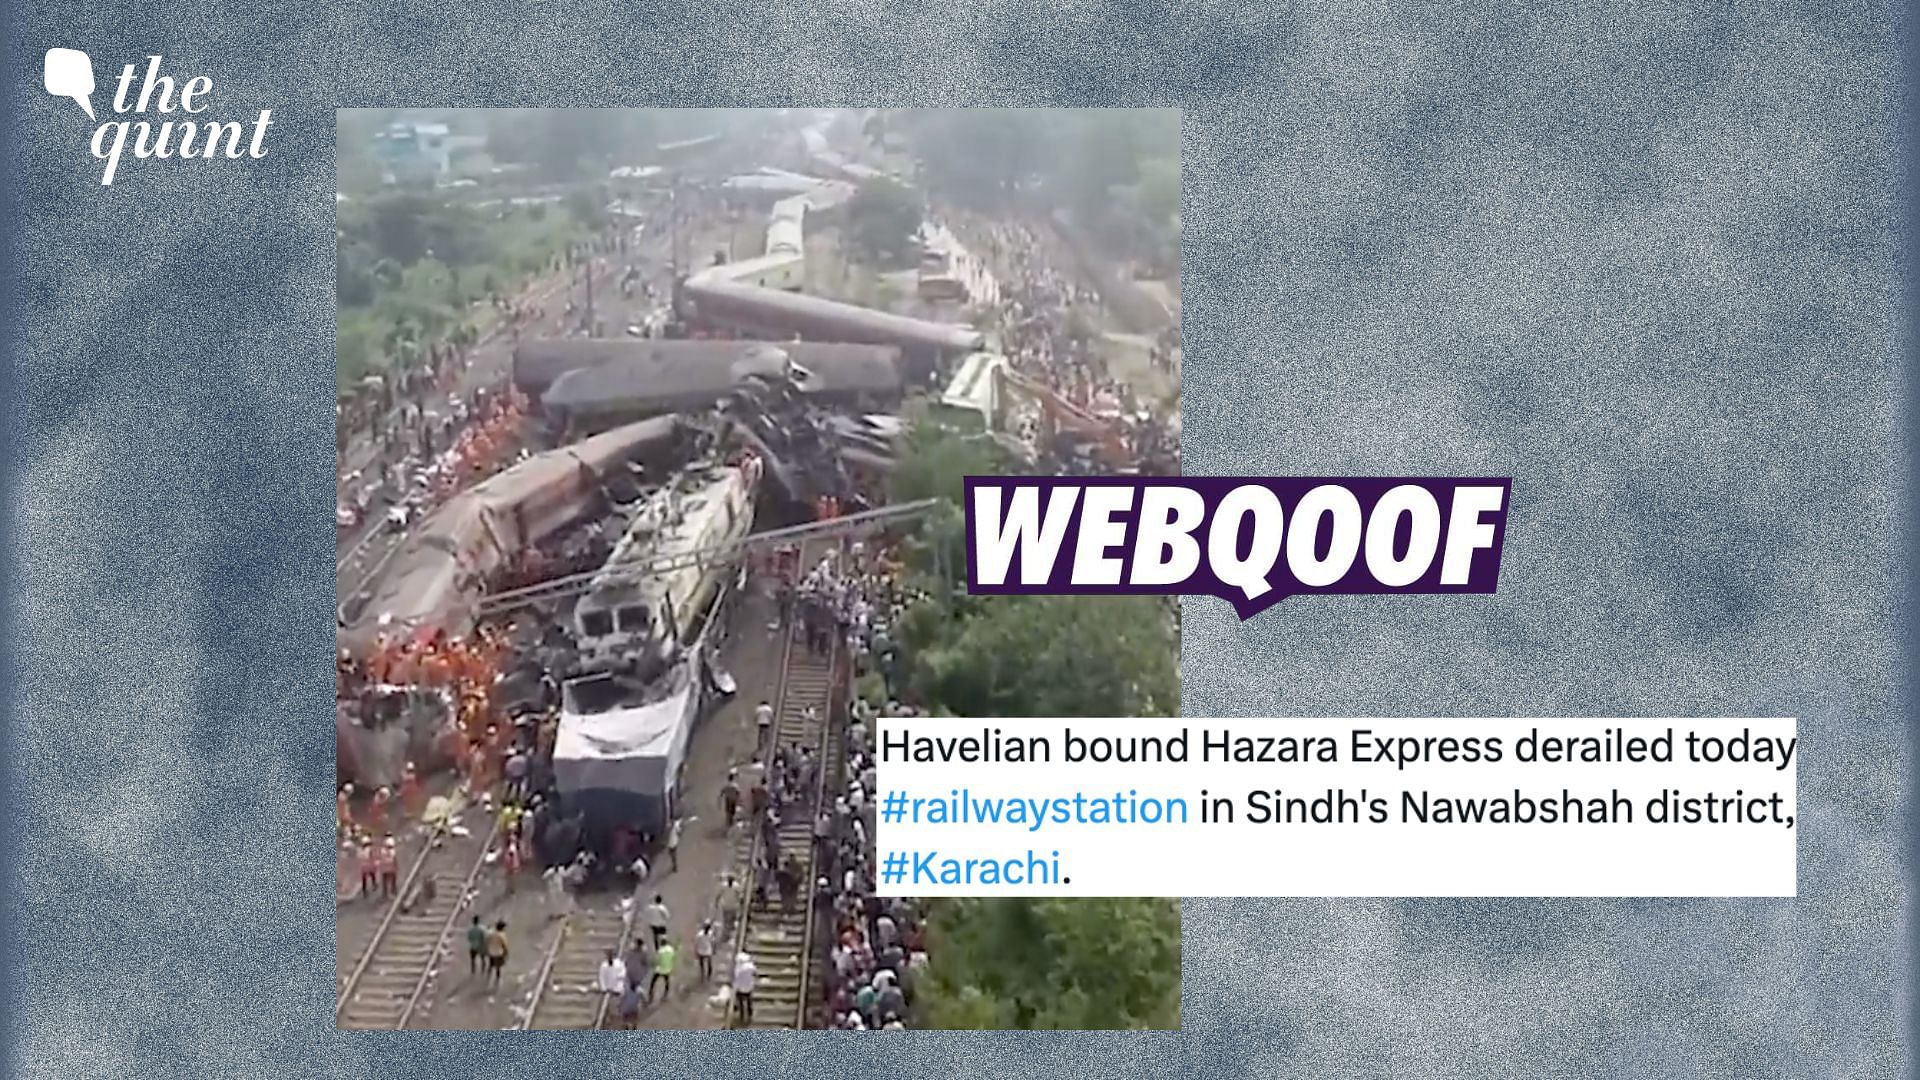 <div class="paragraphs"><p>The Odisha train collision took place on 2 June.&nbsp;</p></div>